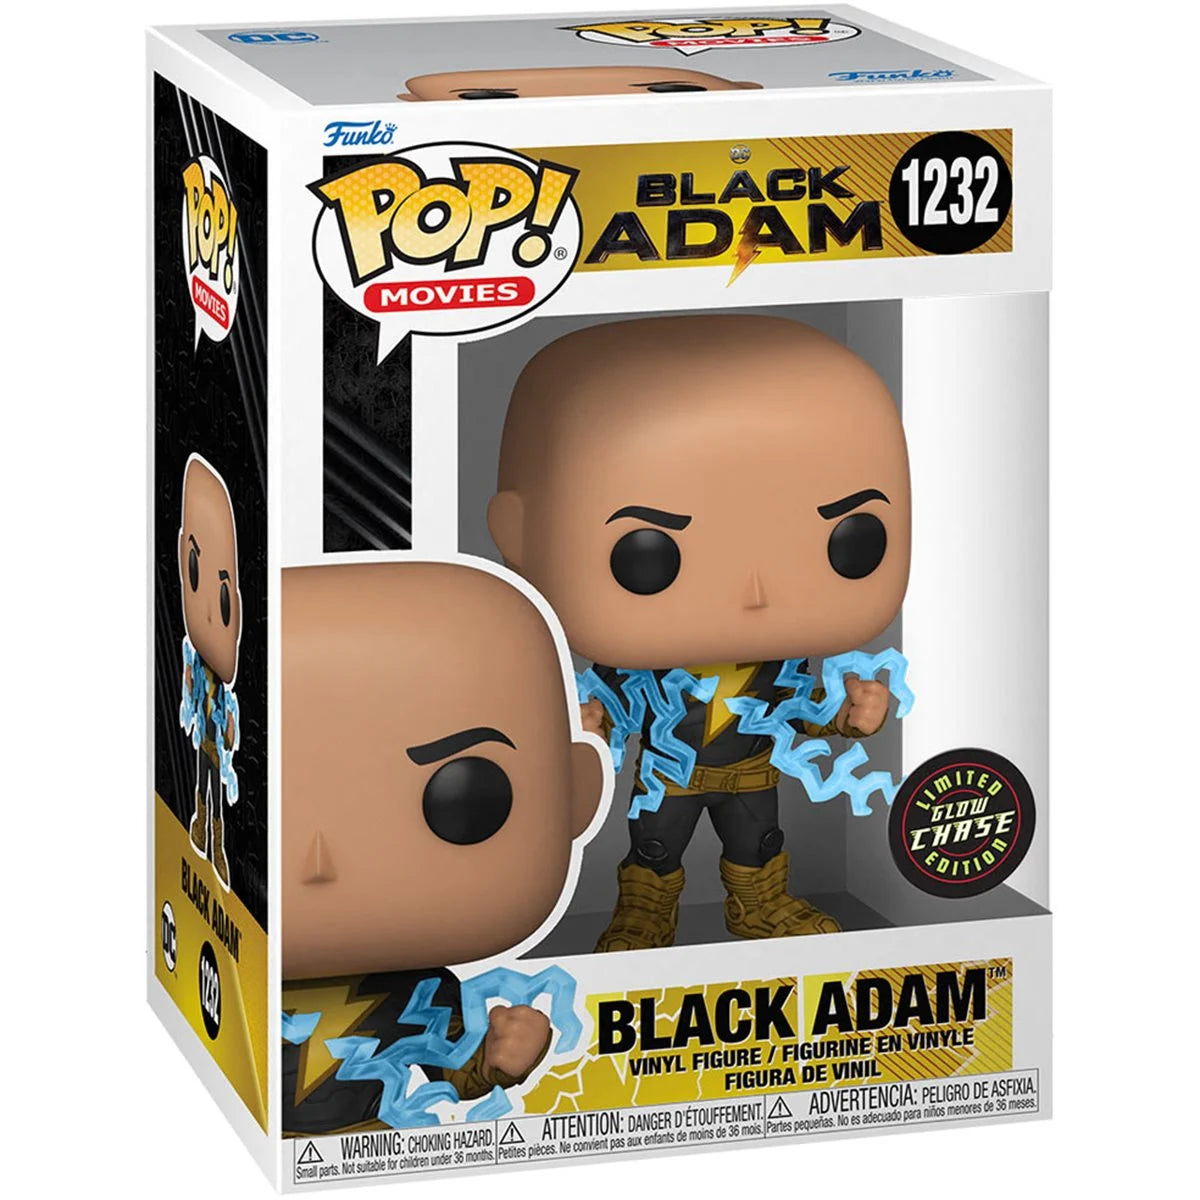 Black Adam (Lightning) Pop! Vinyl Figure